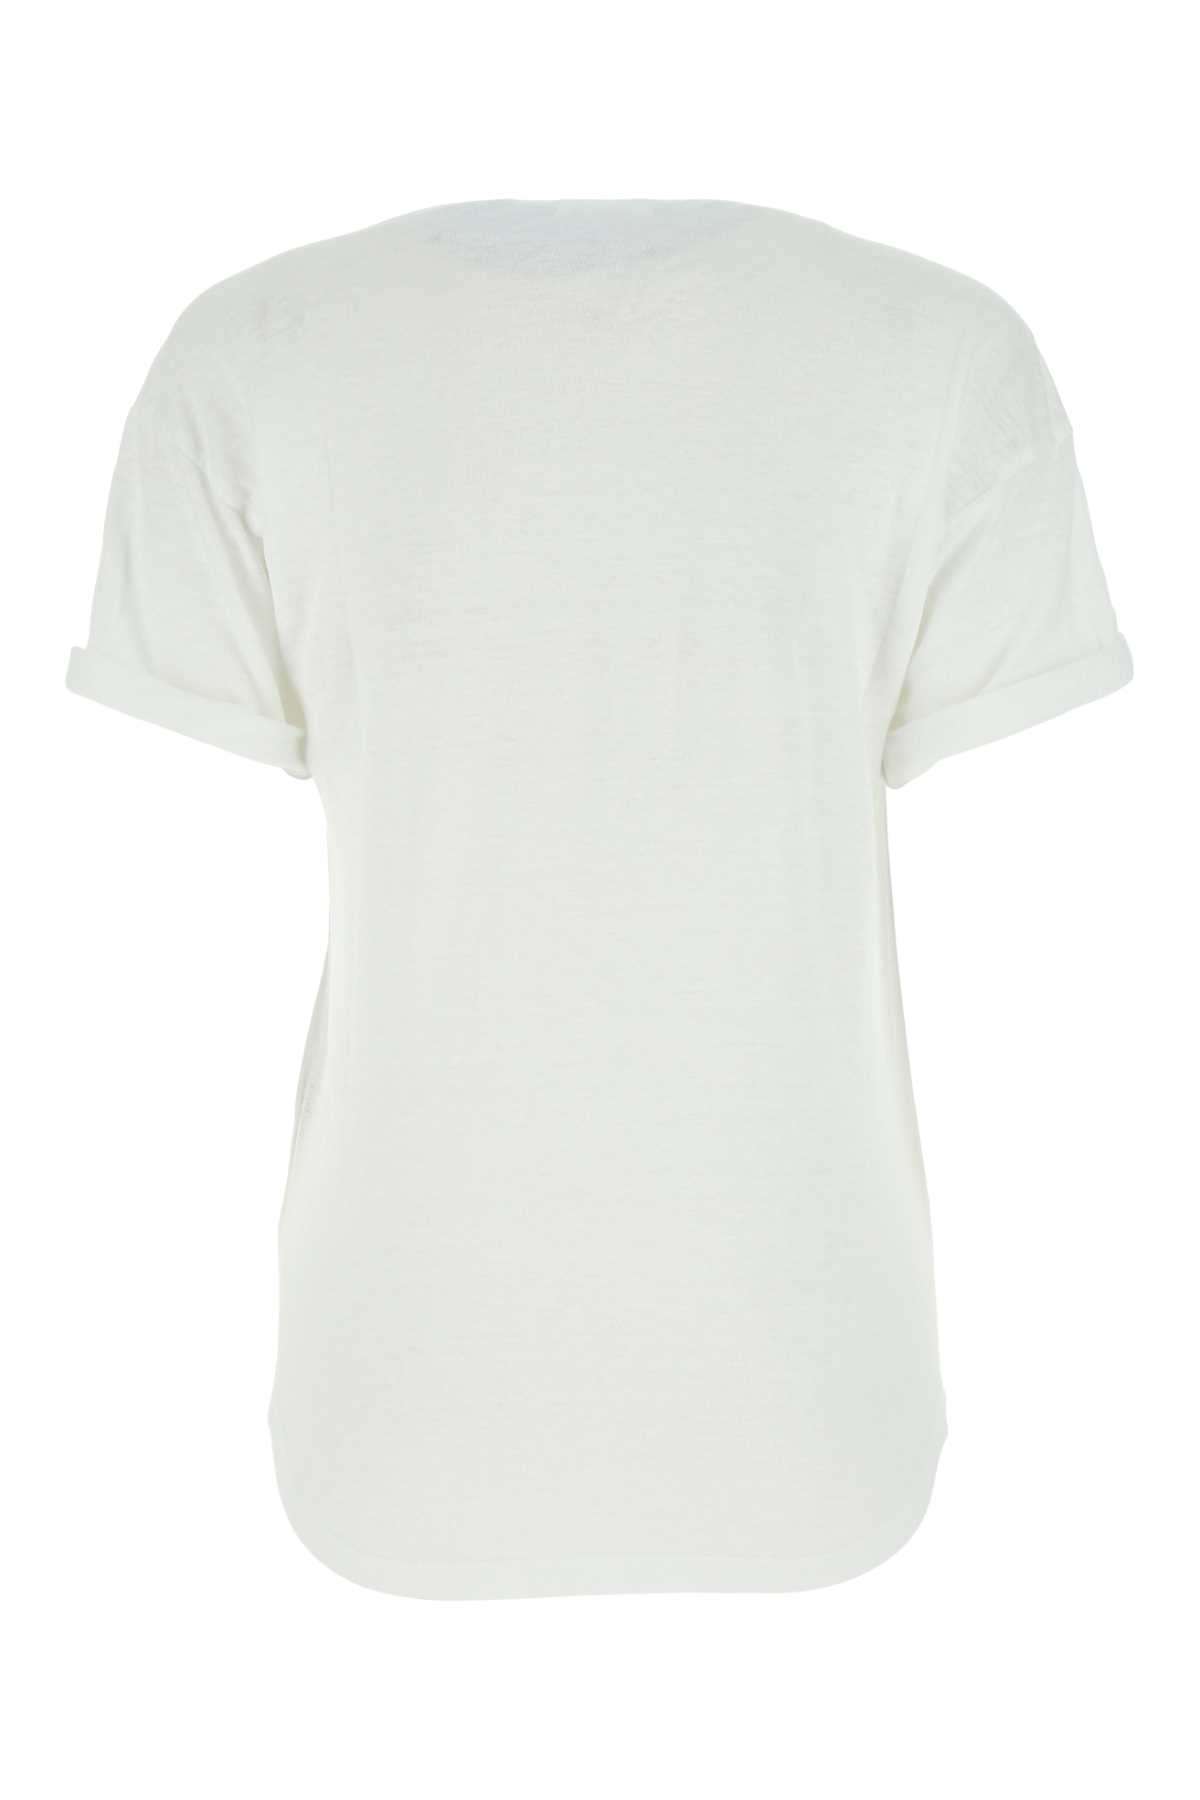 Marant Etoile White Linen Koldi T-shirt